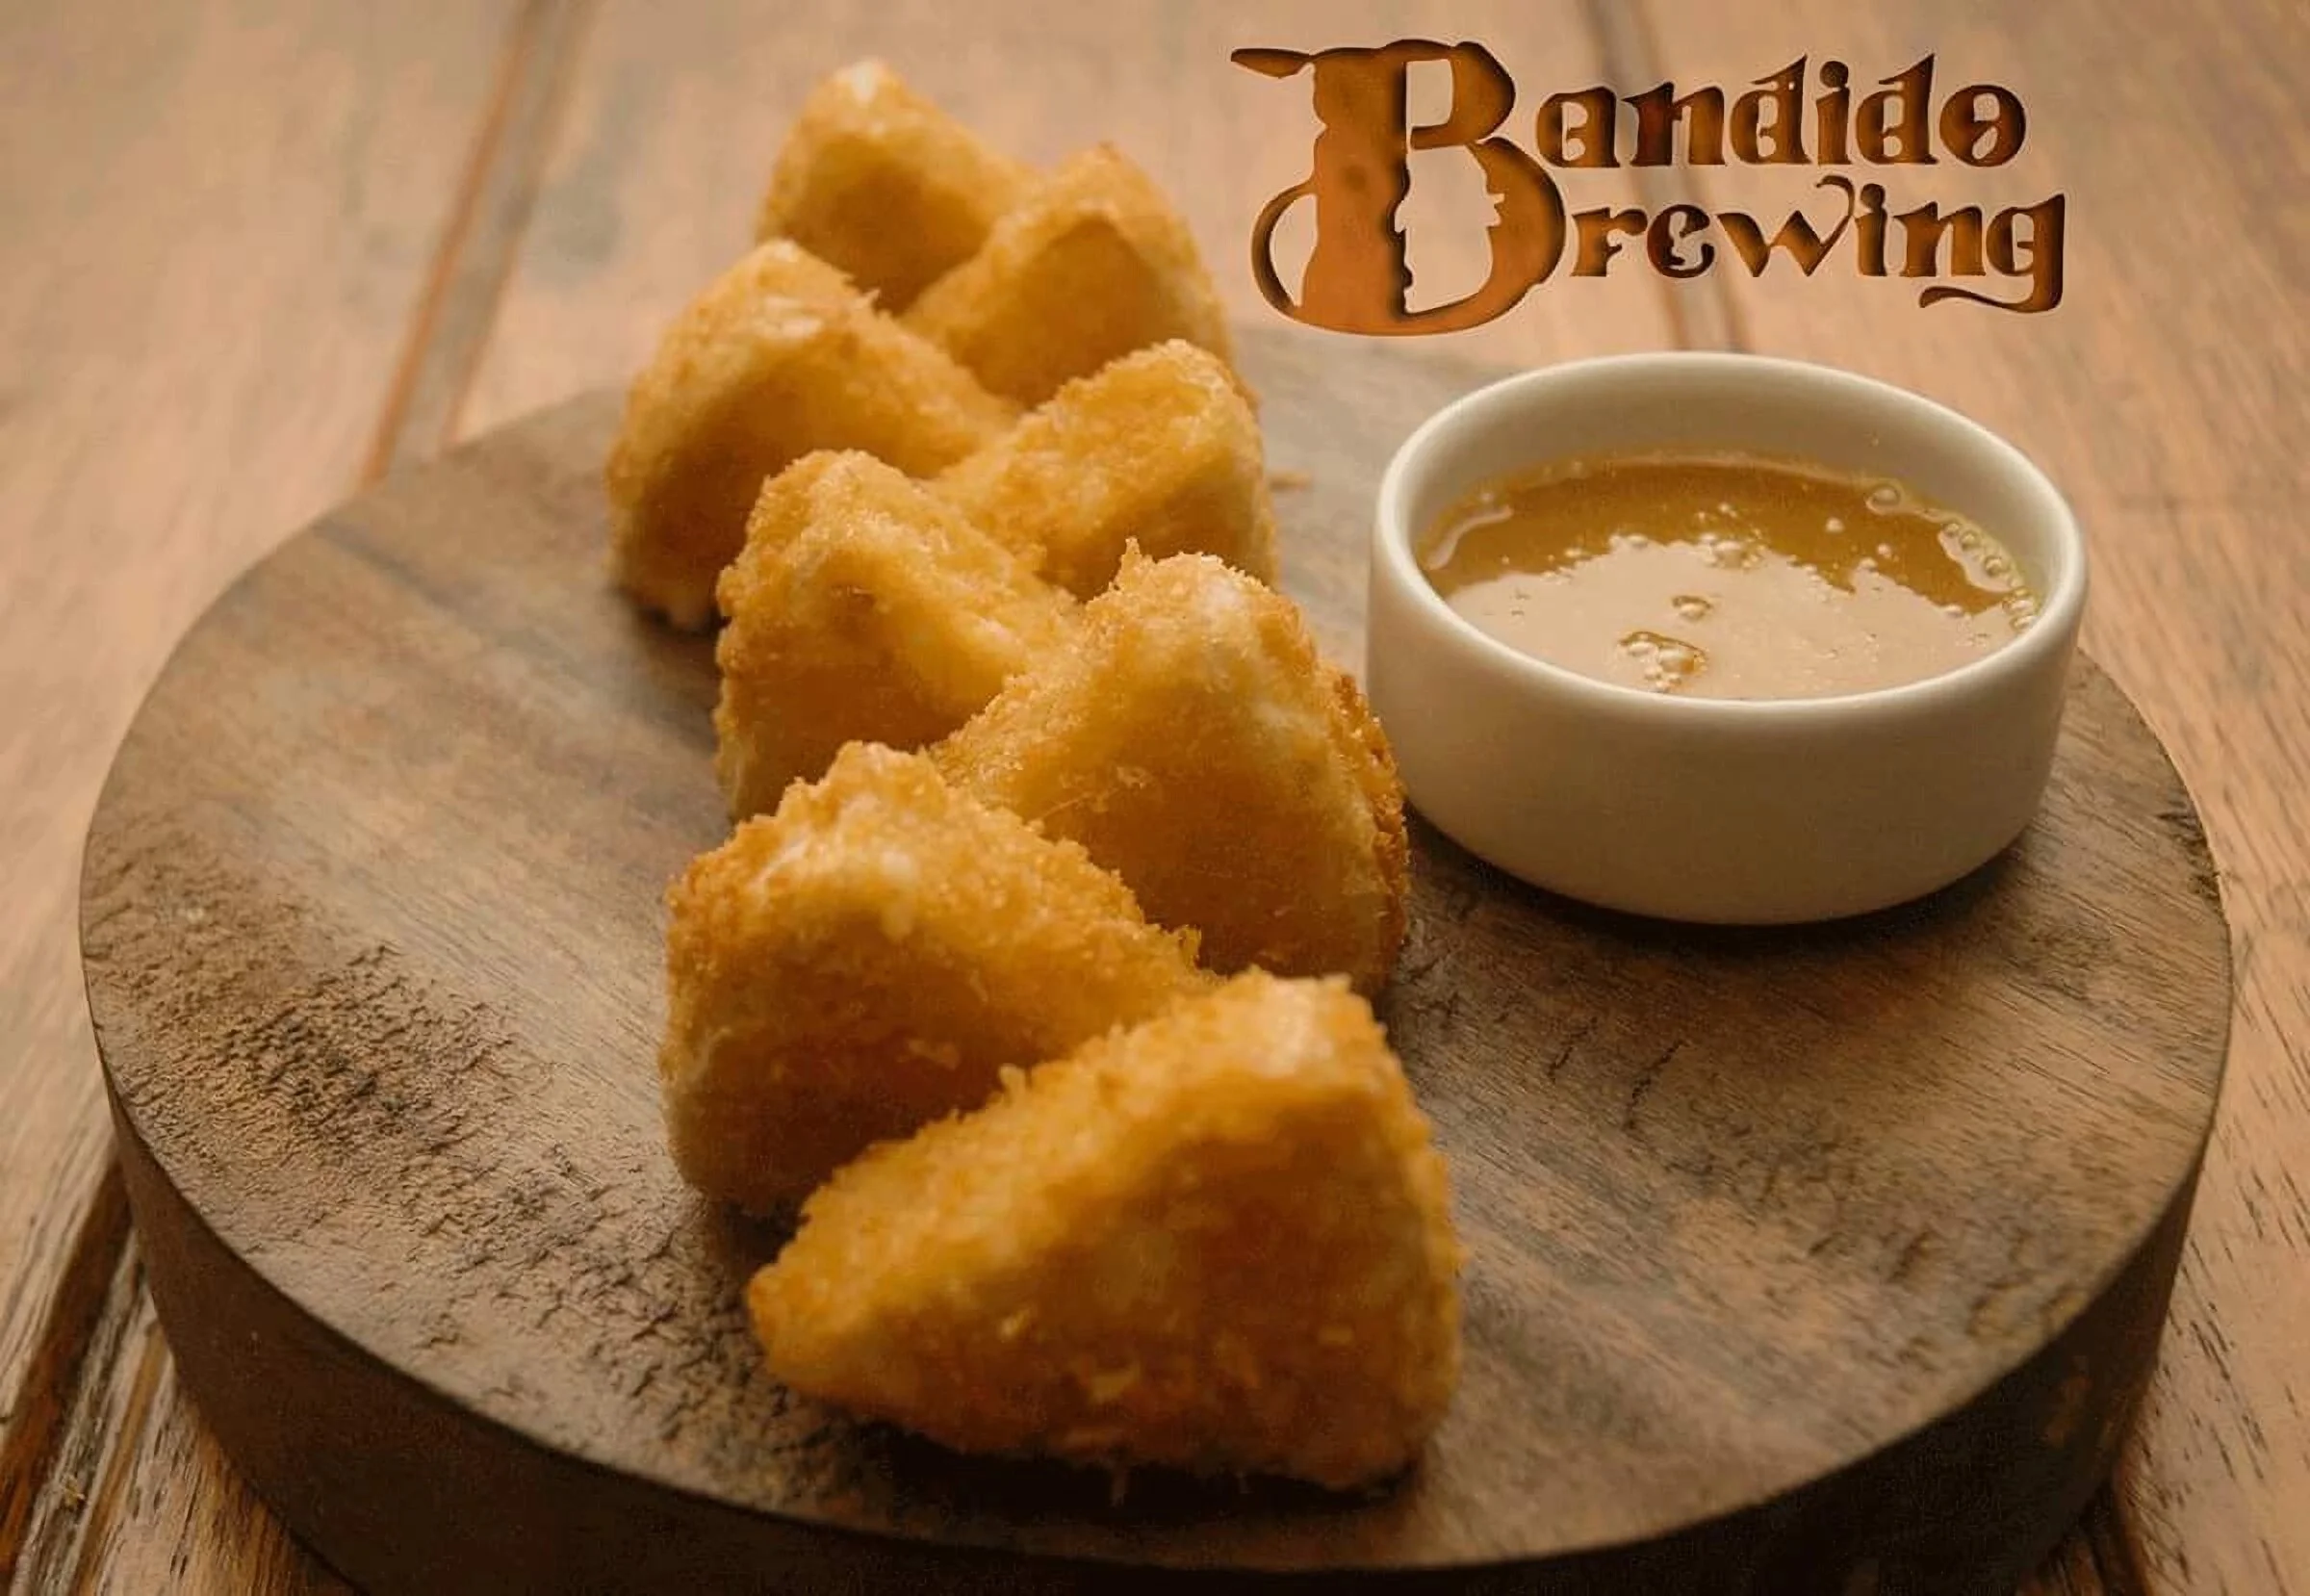 Restaurantes-bandido-brewing-17211